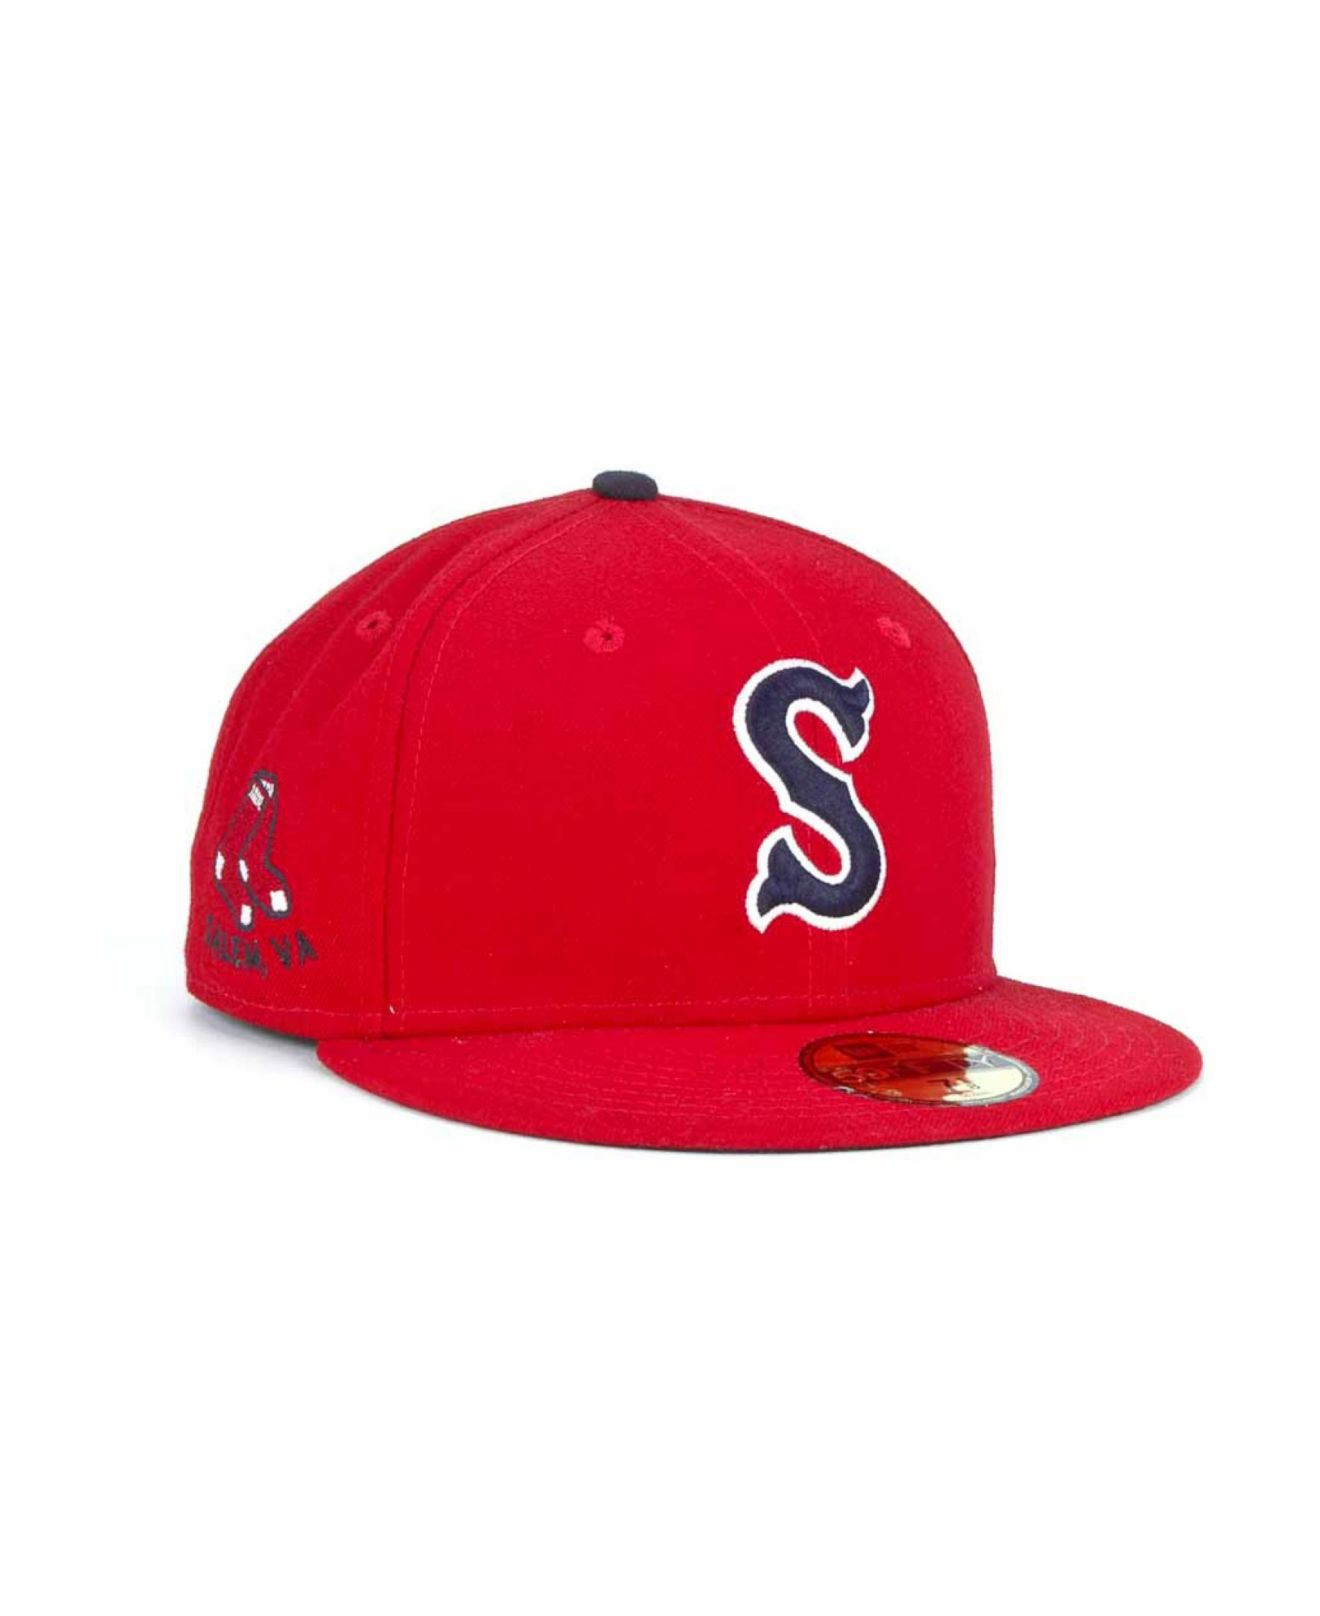 New Era, Accessories, Salem Red Sox Hat